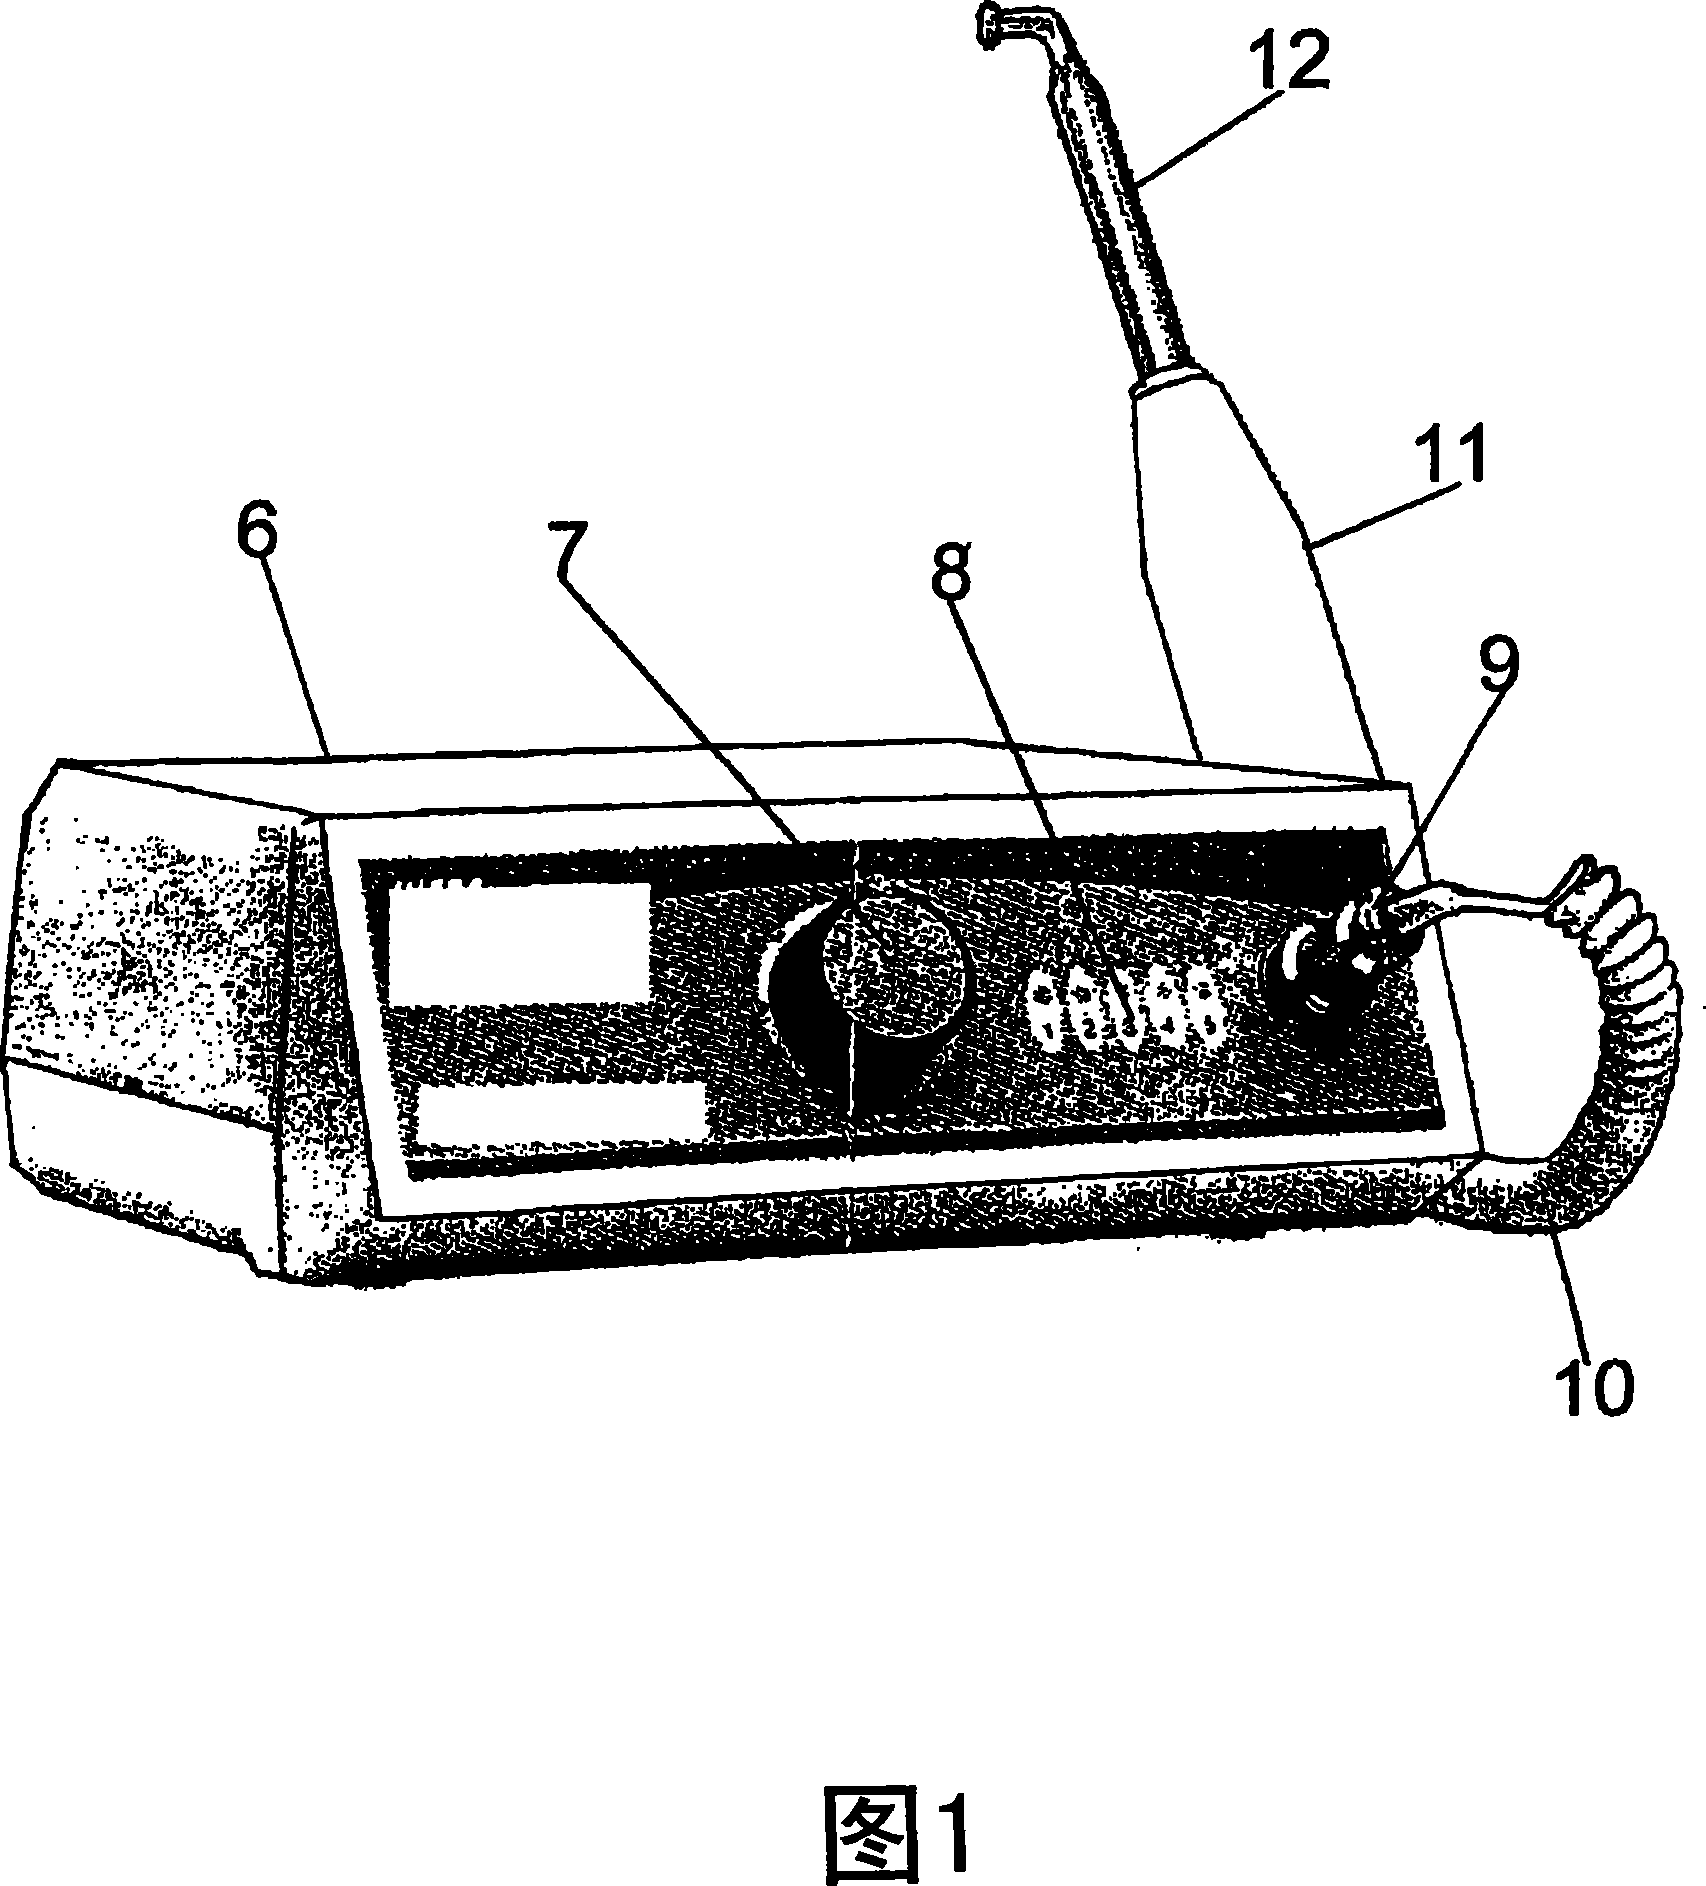 Treatment apparatus